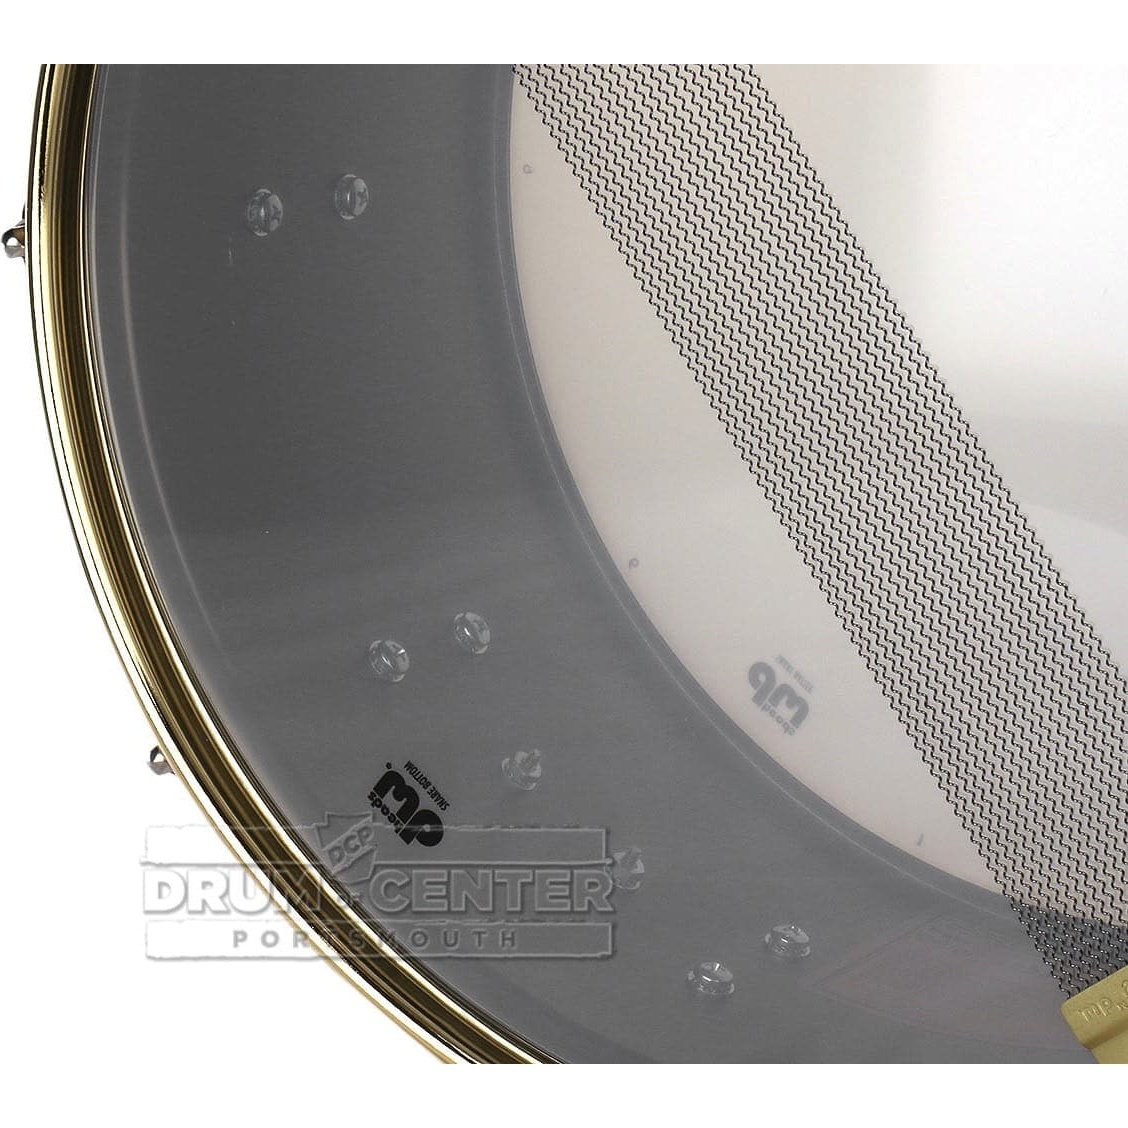 DW Collectors Series Satin Black Brass Snare Drum - 14x6.5 - Gold Hardware